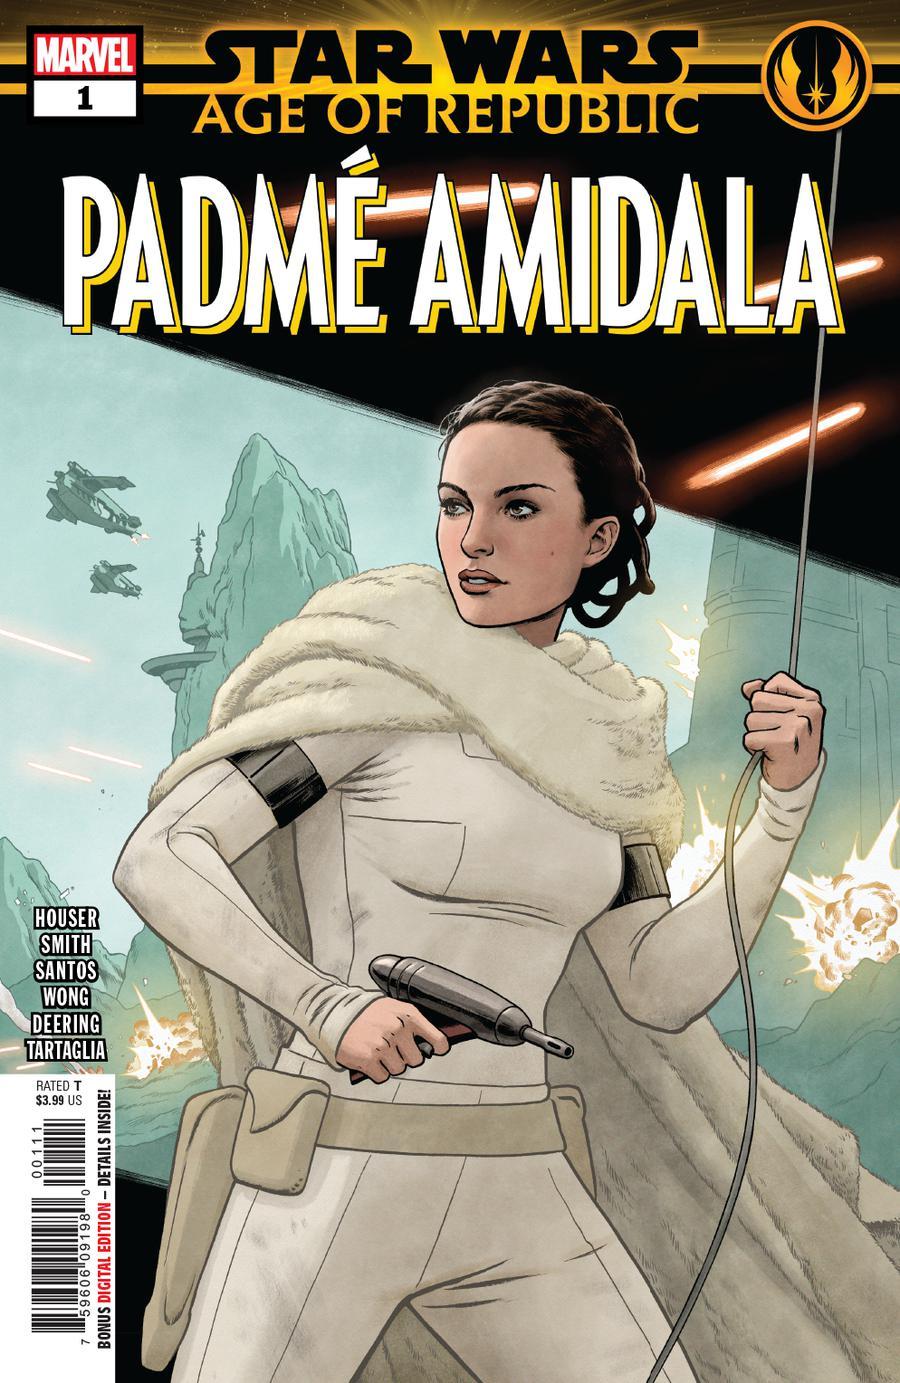 Star Wars Age Of Republic Padme Amidala Vol. 1 #1